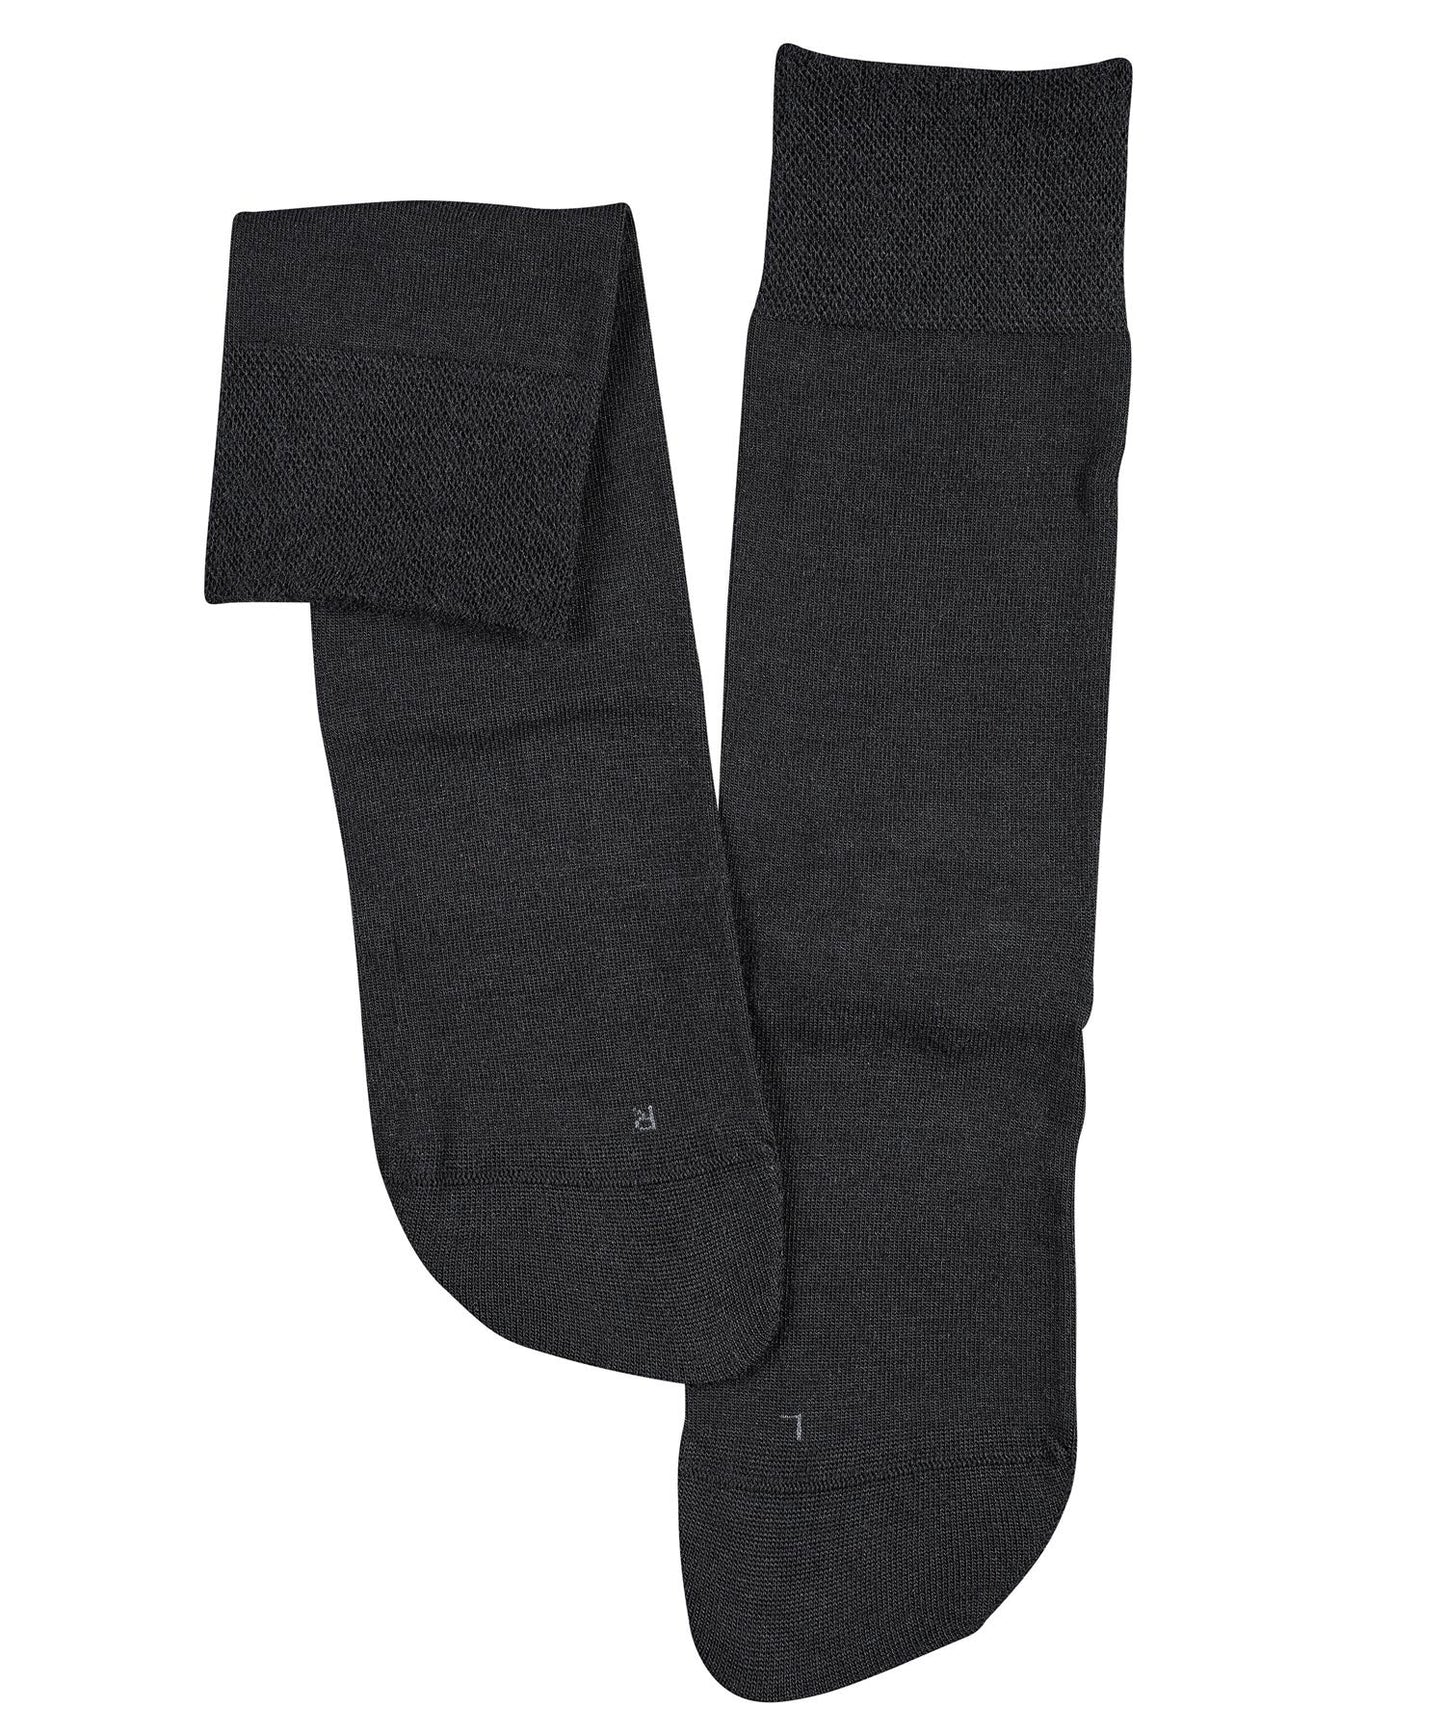 Sensitiv Berlin sokk i ull Black